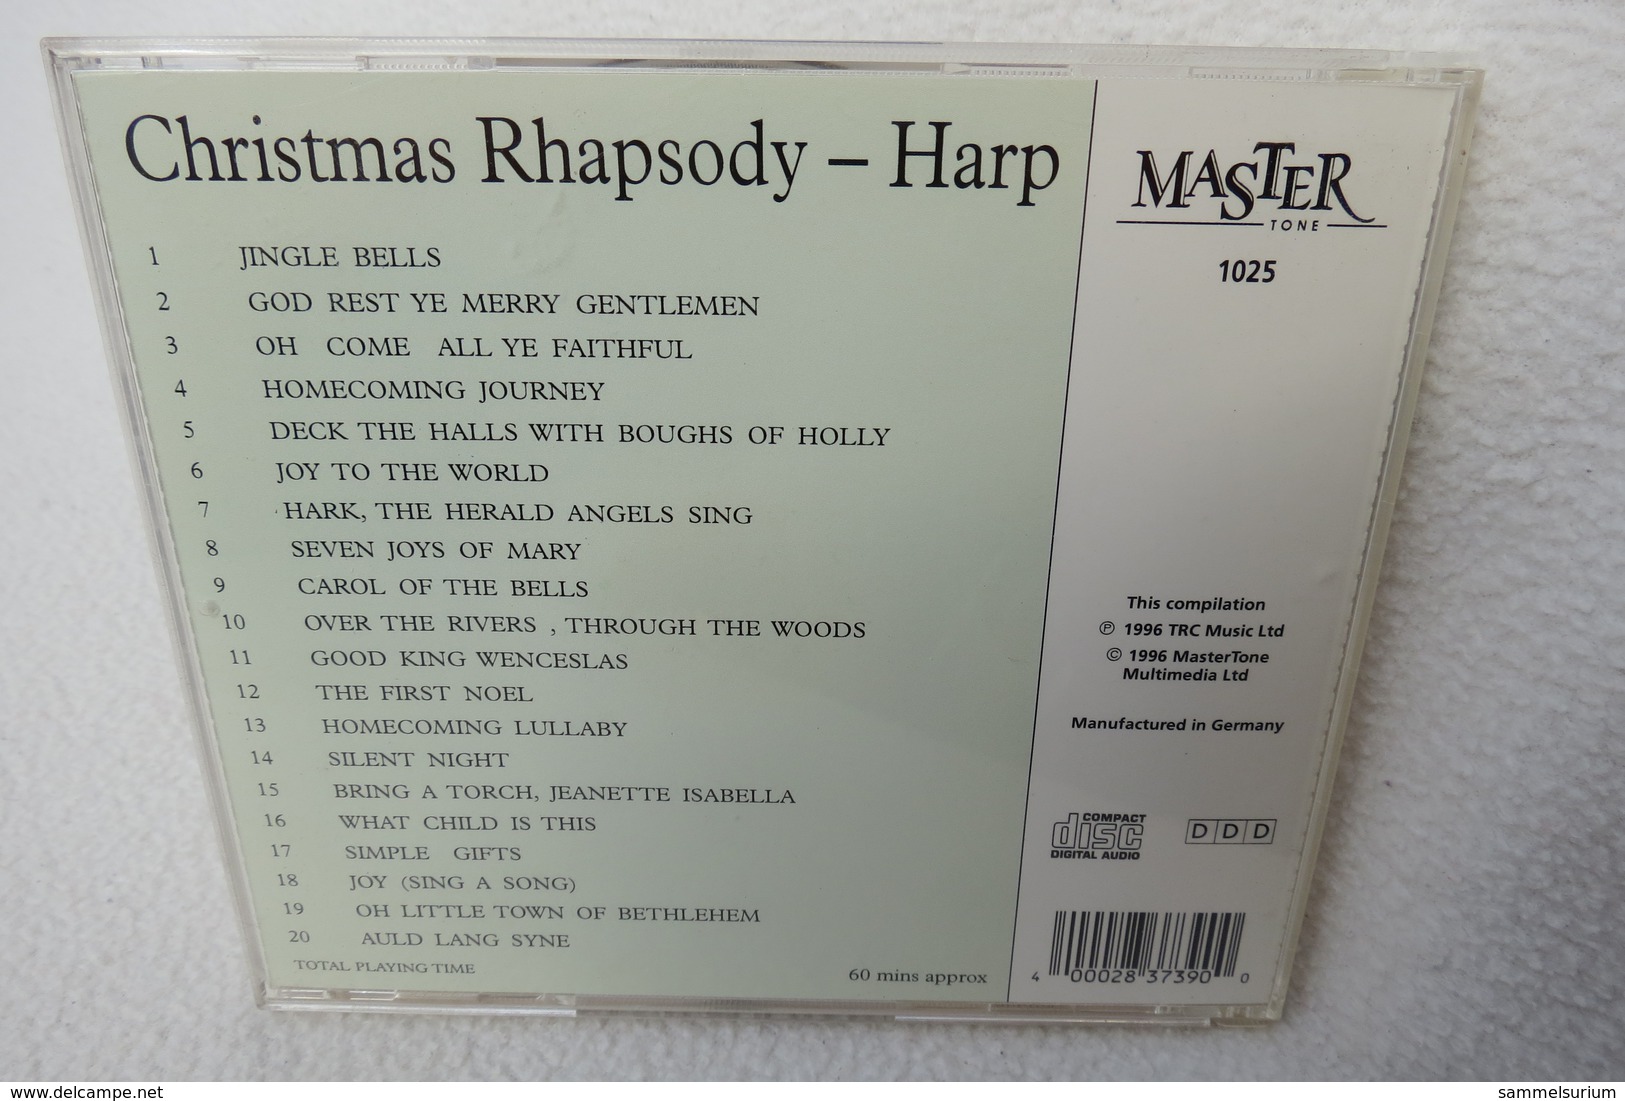 CD "Christmas Rhapsody" über 1 Stunde Instrumental Christmas Musik Mit Der Harfe - Kerstmuziek